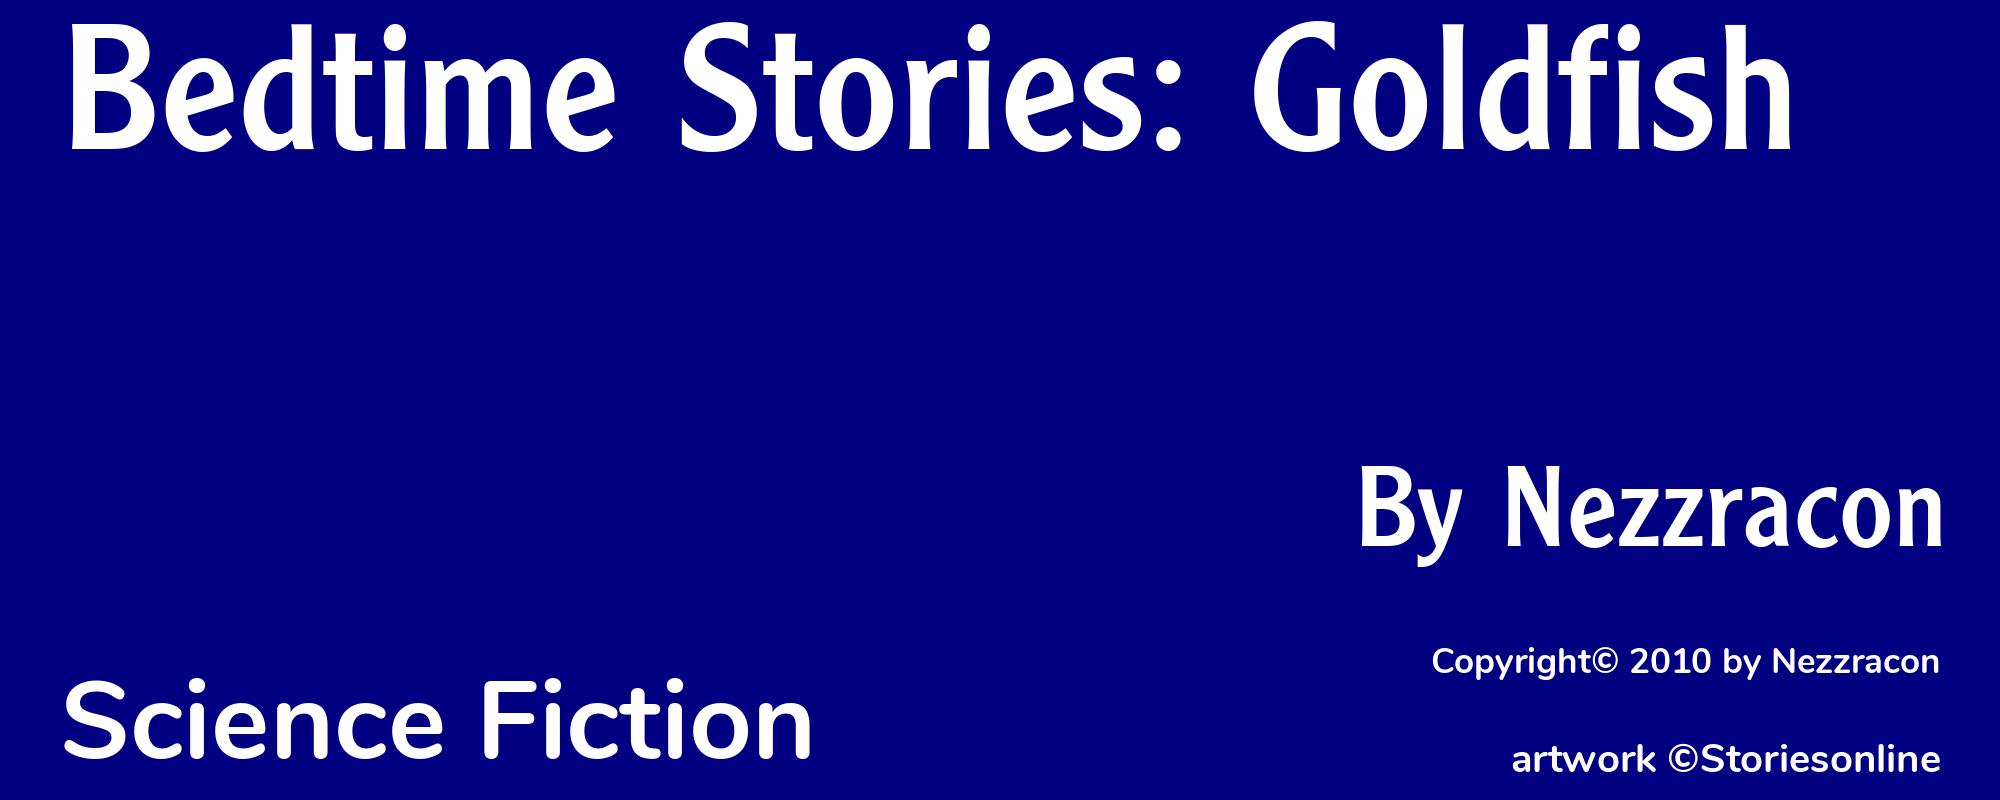 Bedtime Stories: Goldfish - Cover